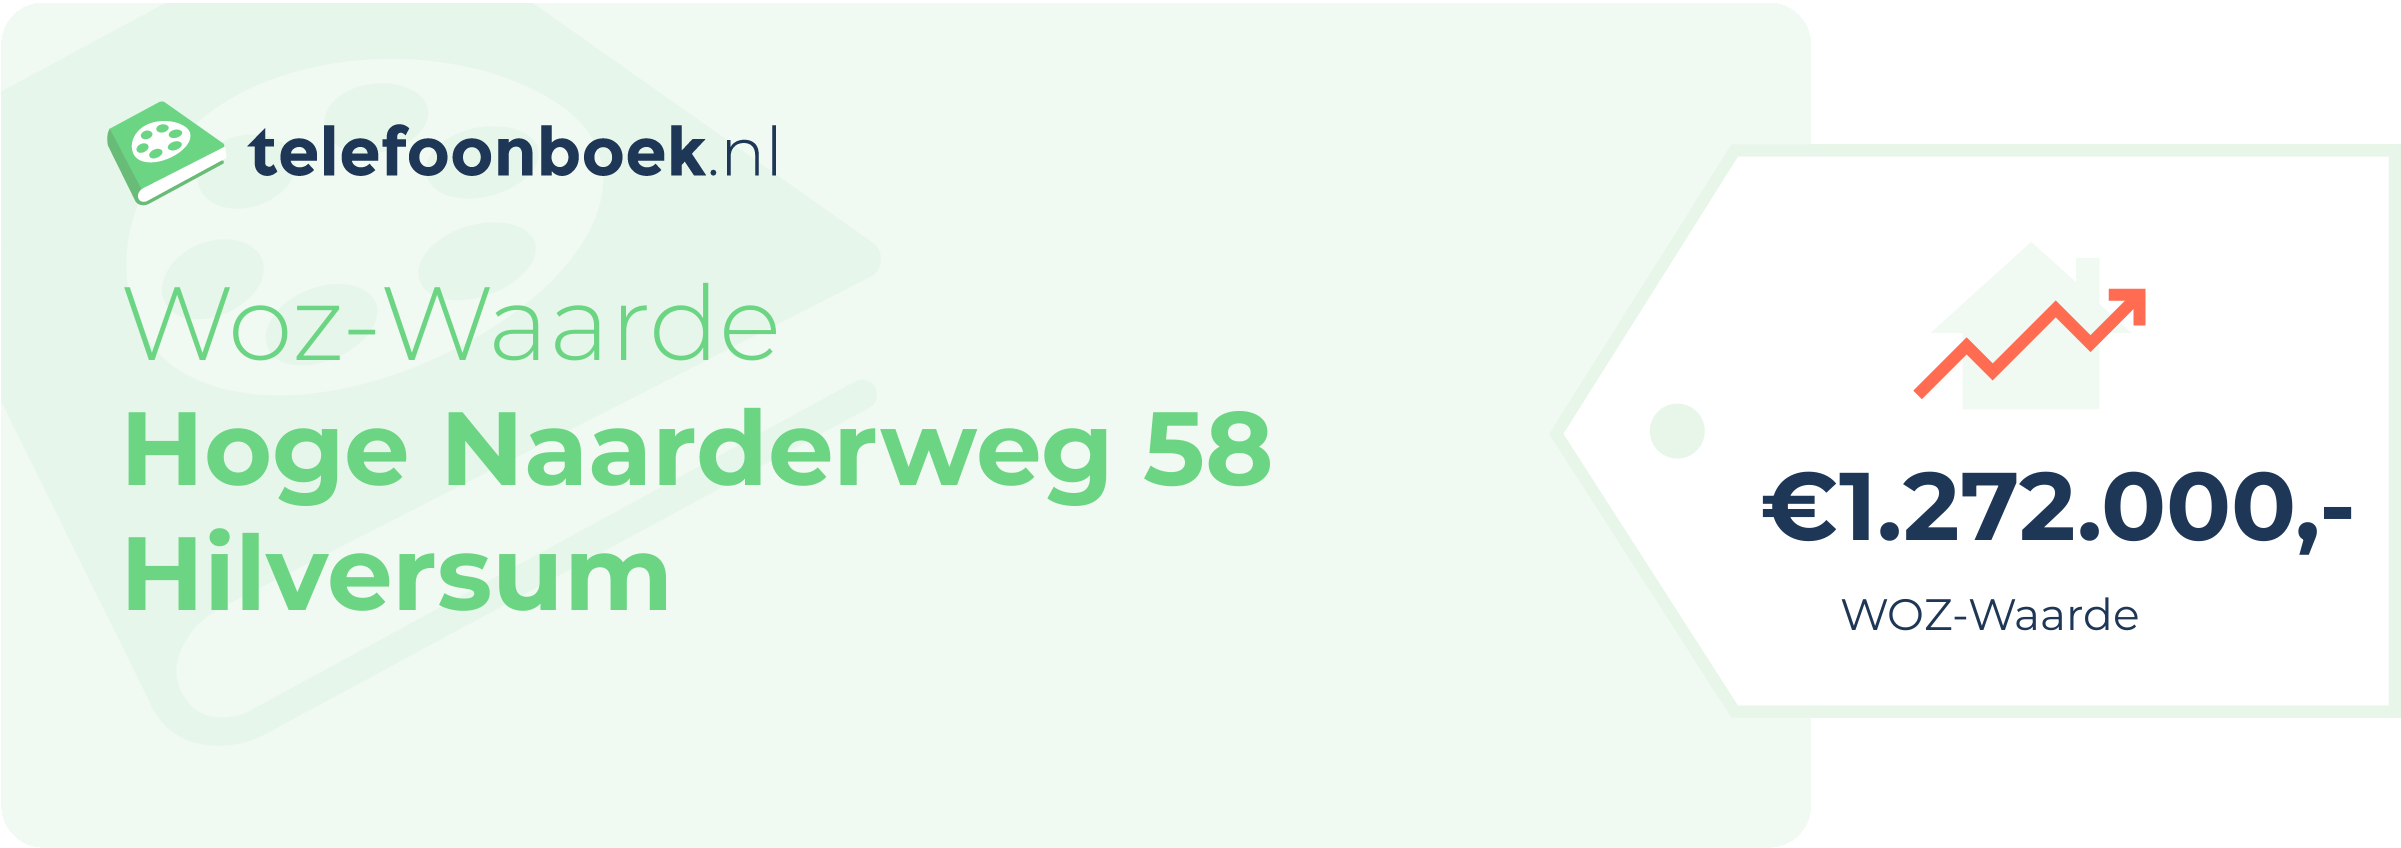 WOZ-waarde Hoge Naarderweg 58 Hilversum